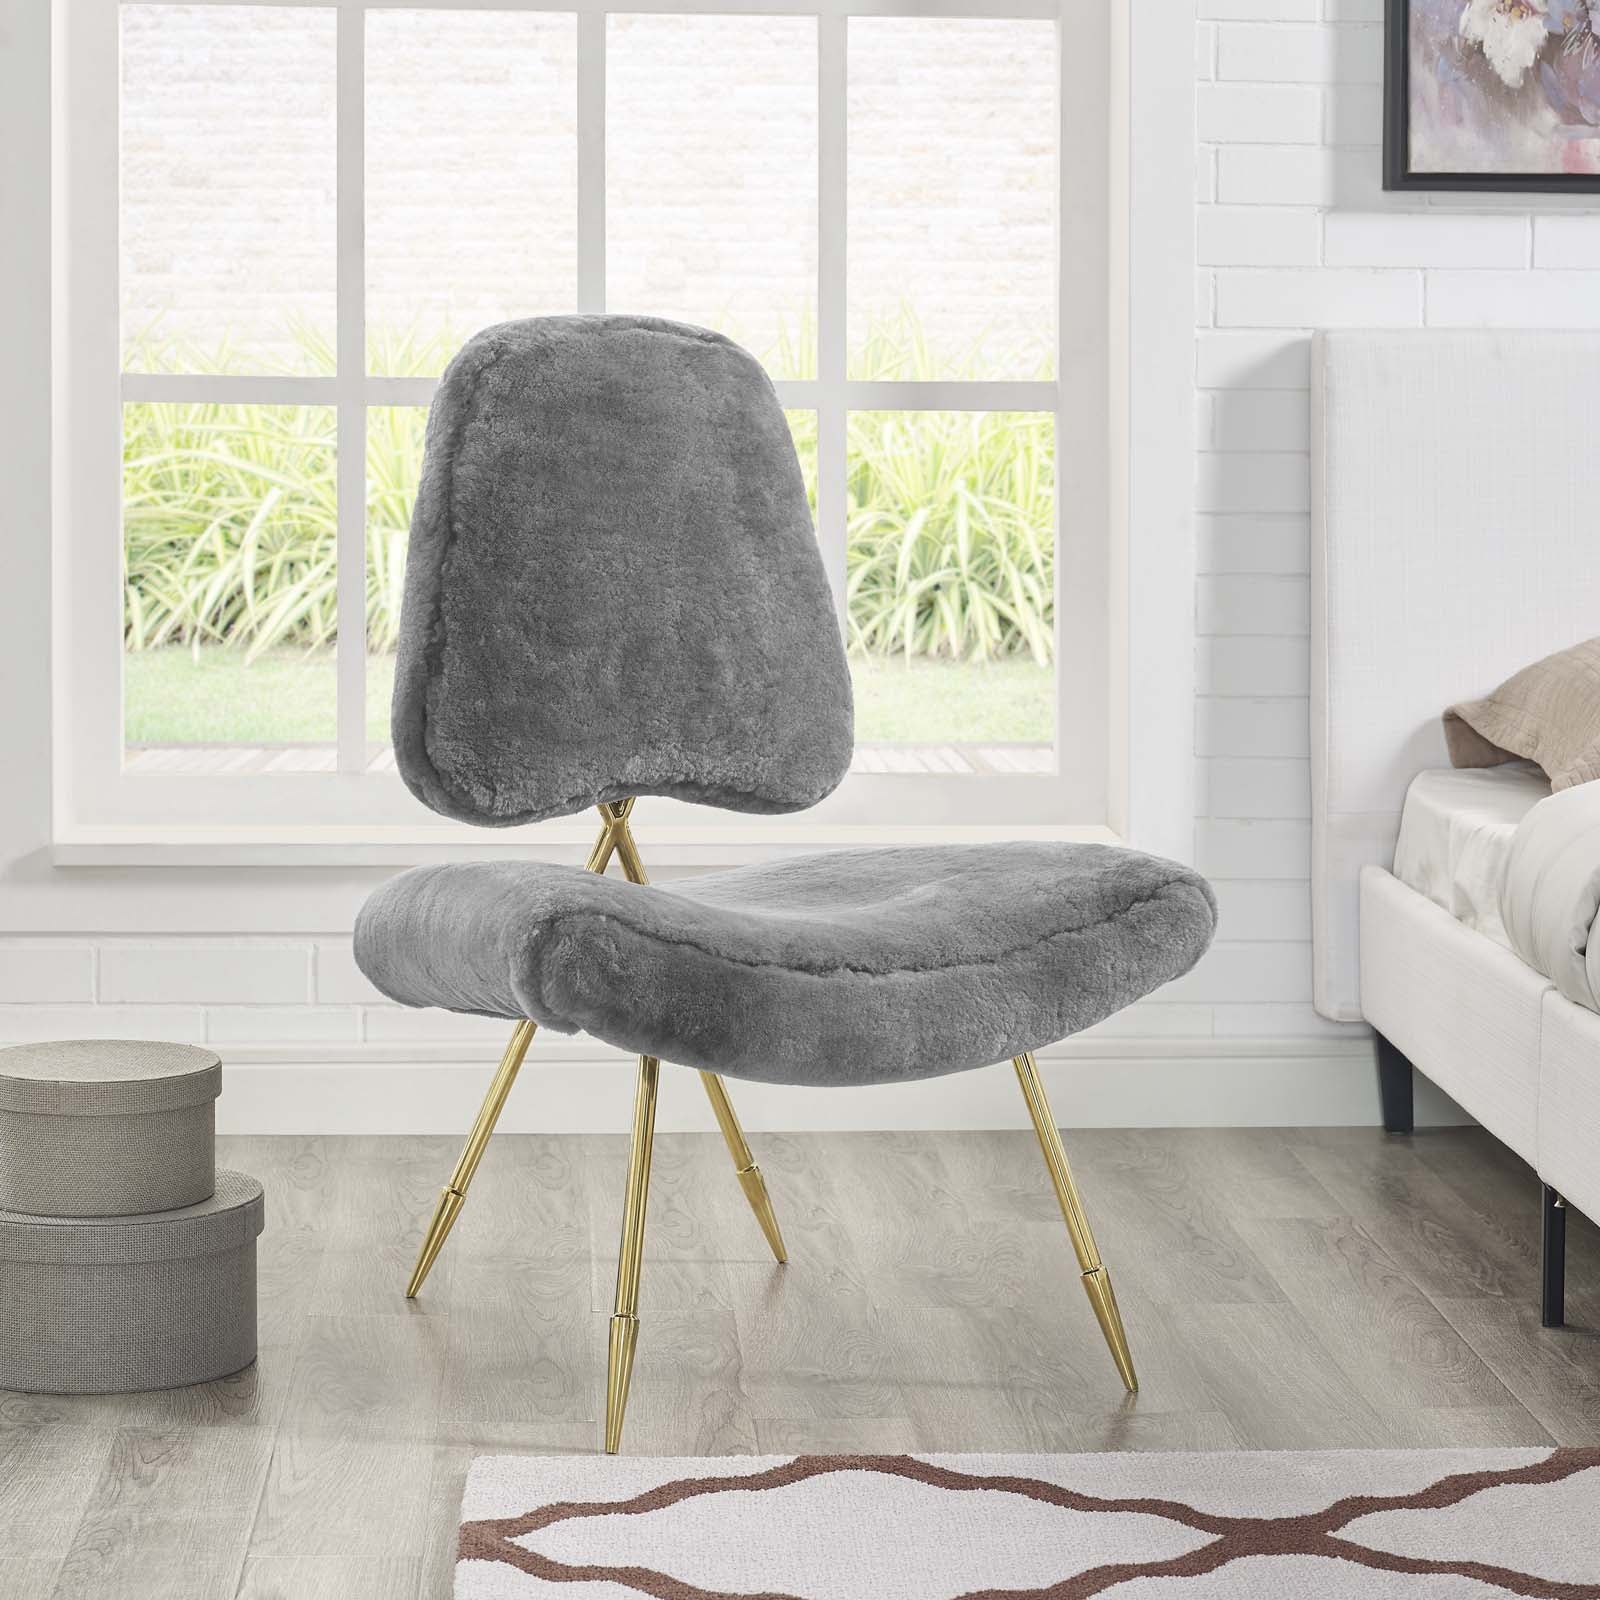 Ponder Upholstered Sheepskin Fur Lounge Chair - East Shore Modern Home Furnishings